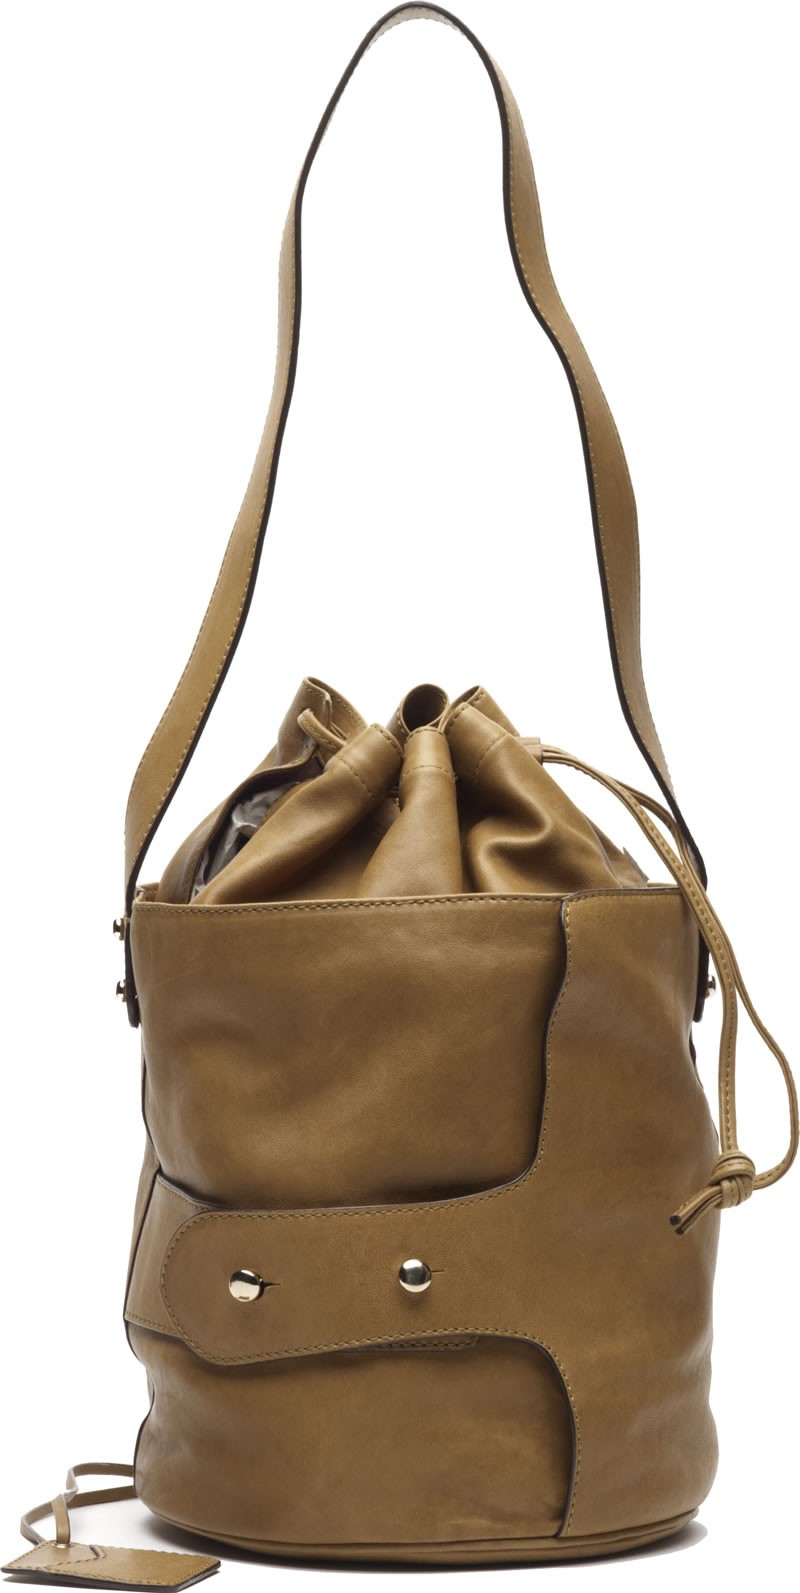 Perception & Co.: Amazing Accessories: Tila March Handbags